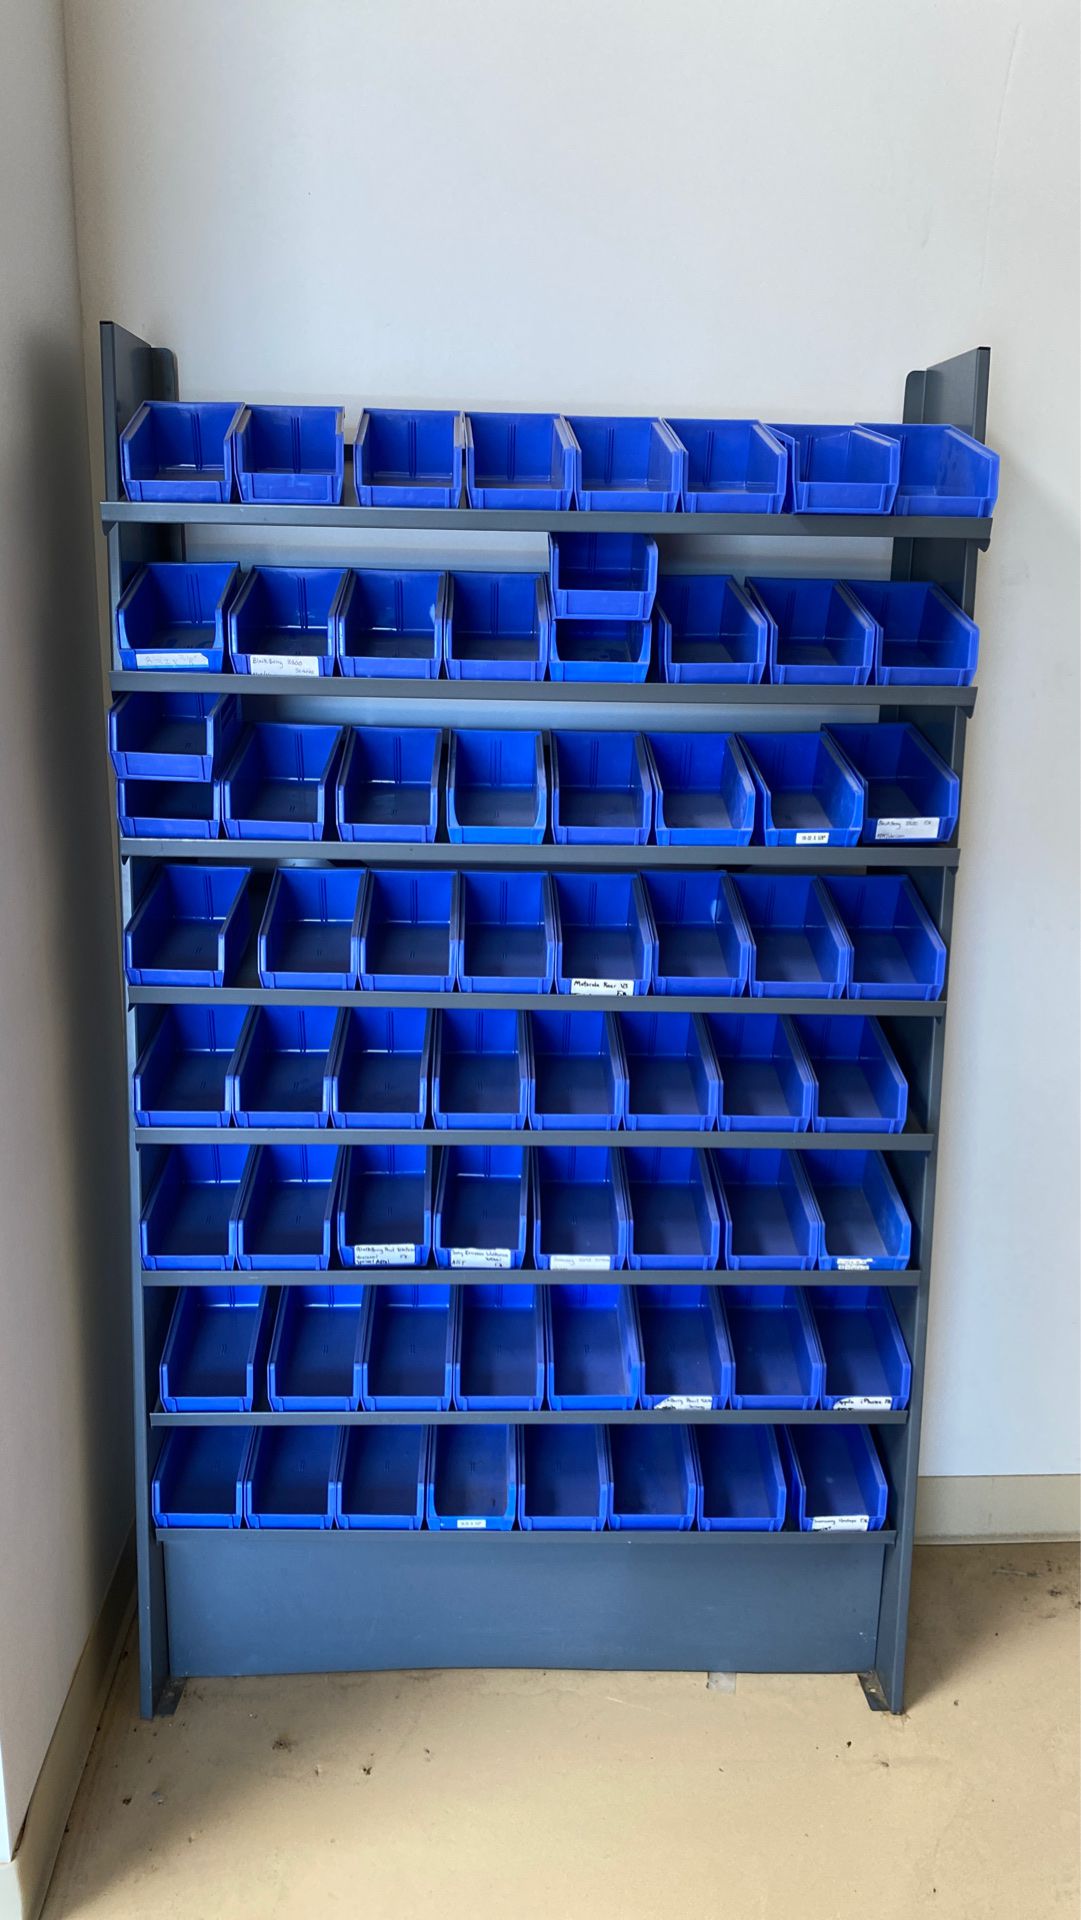 Uline bin rack with blue bins